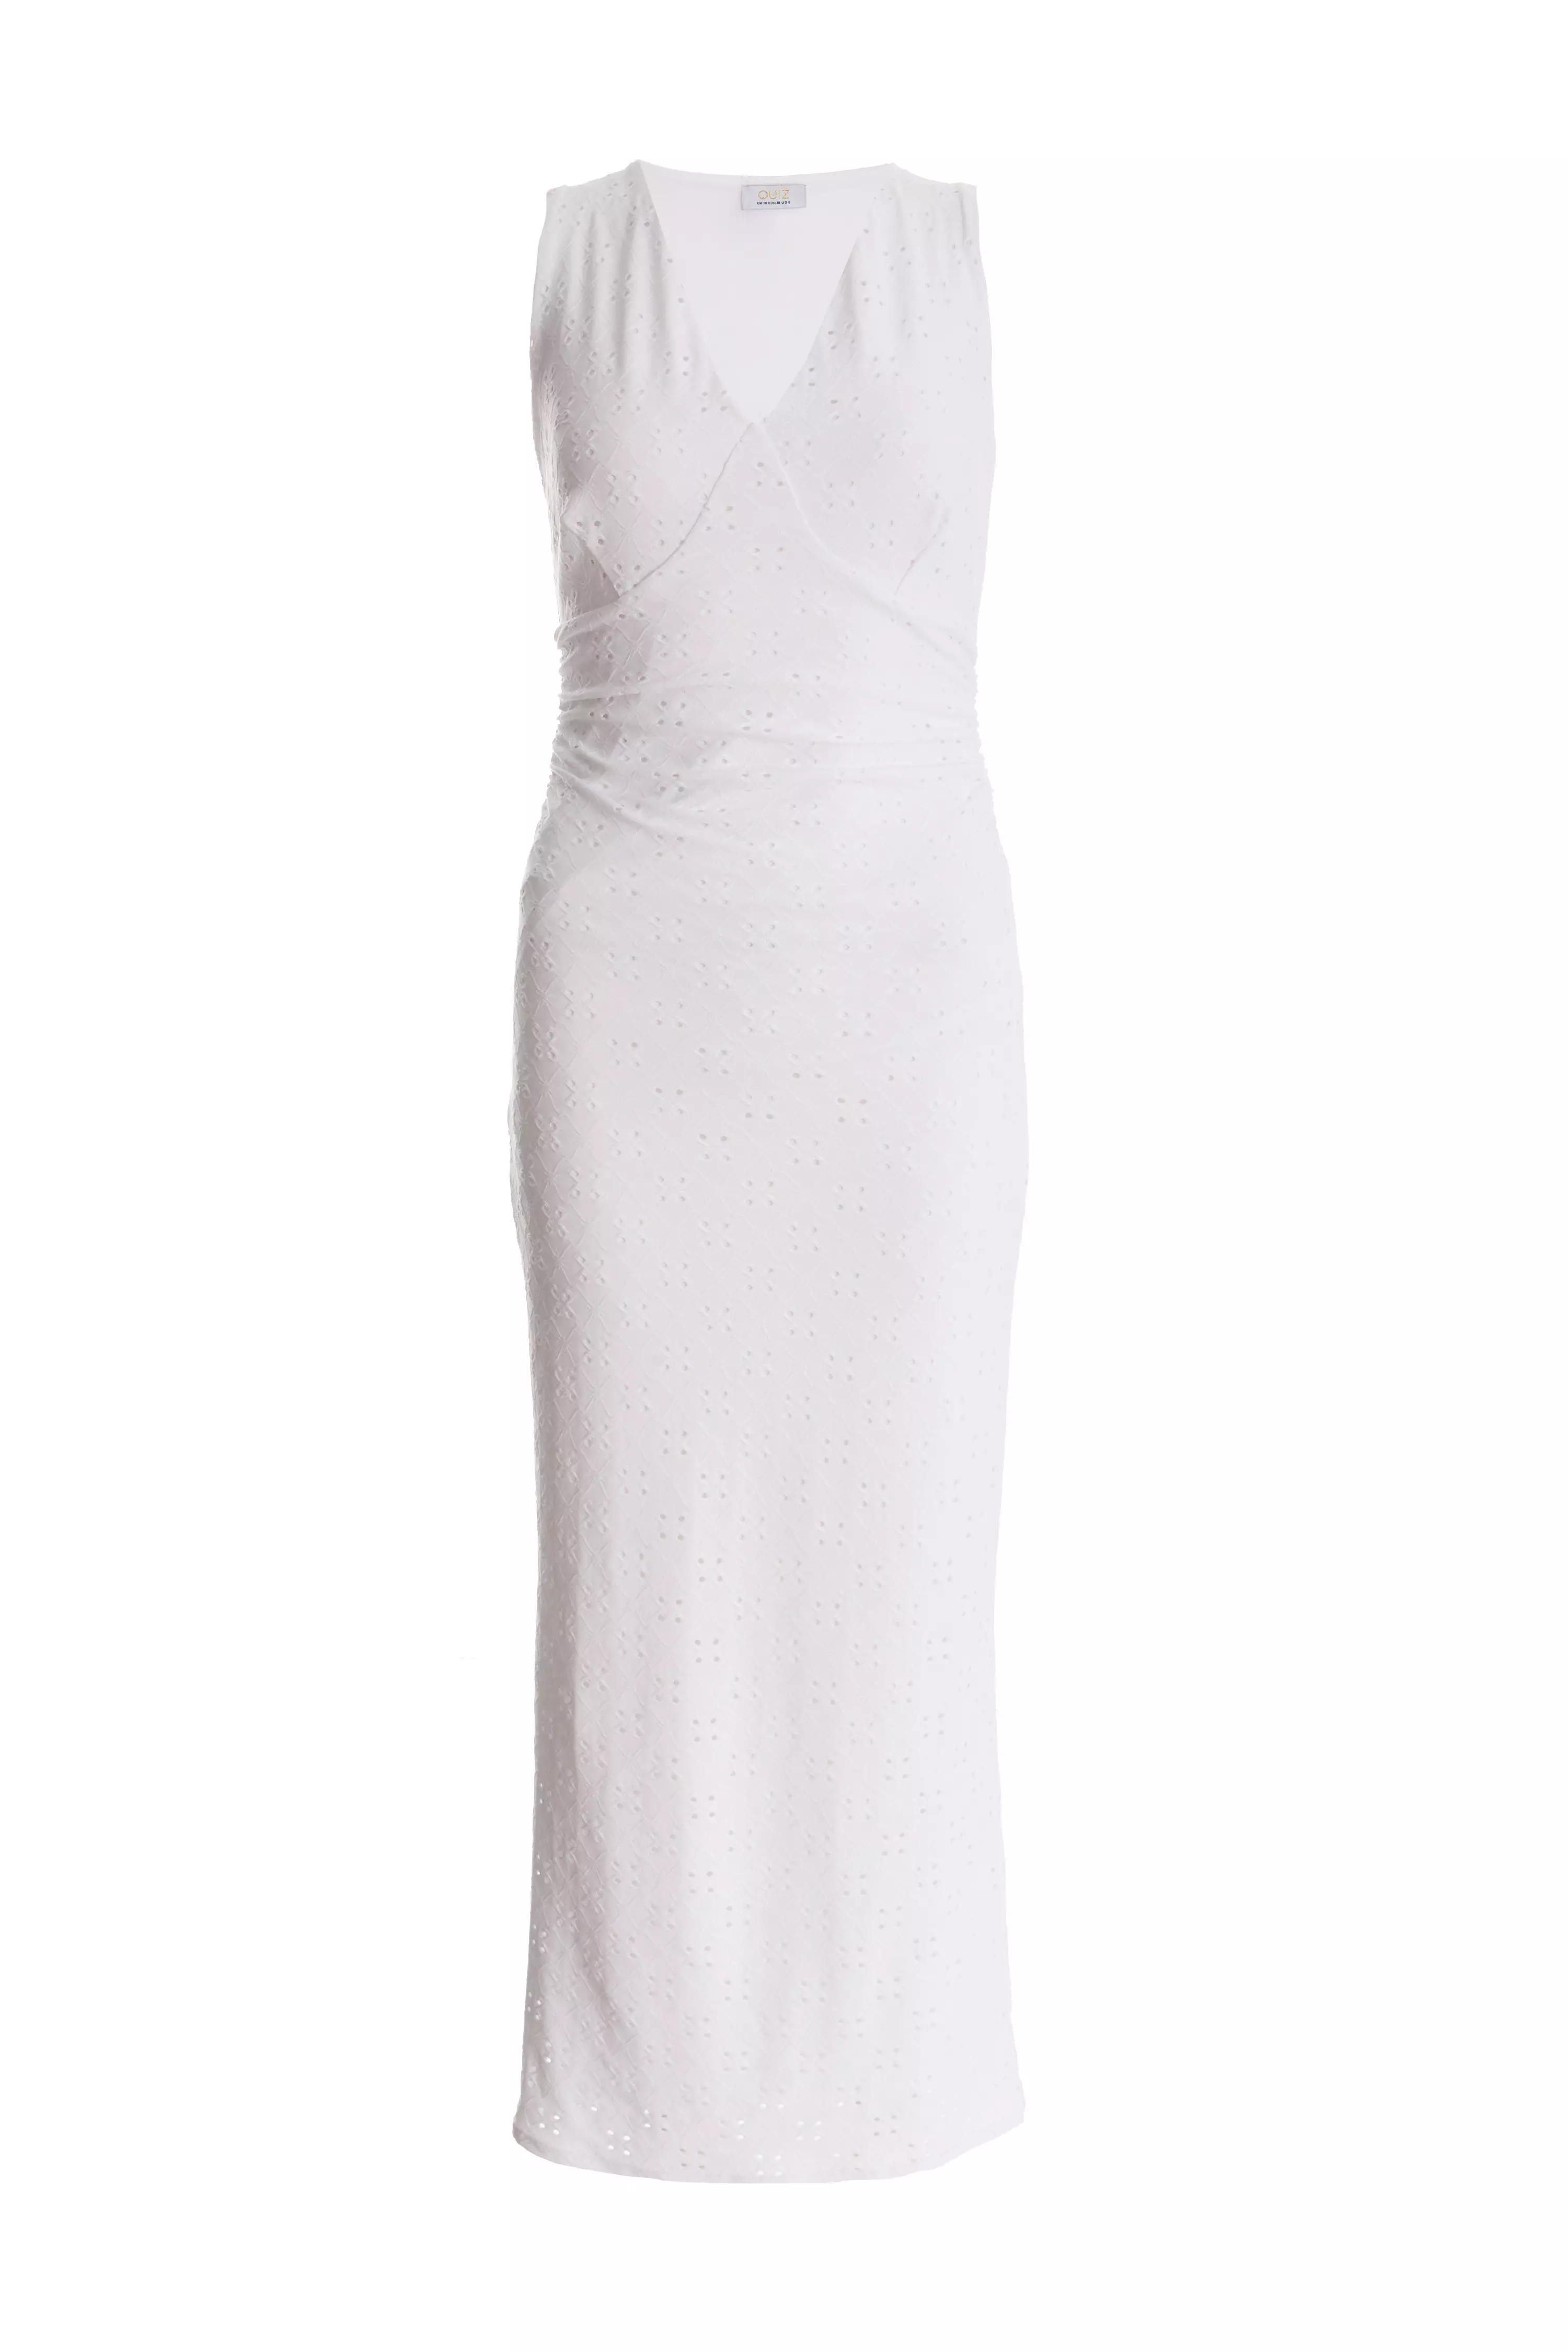 White Embroidered Bodycon Midaxi Dress